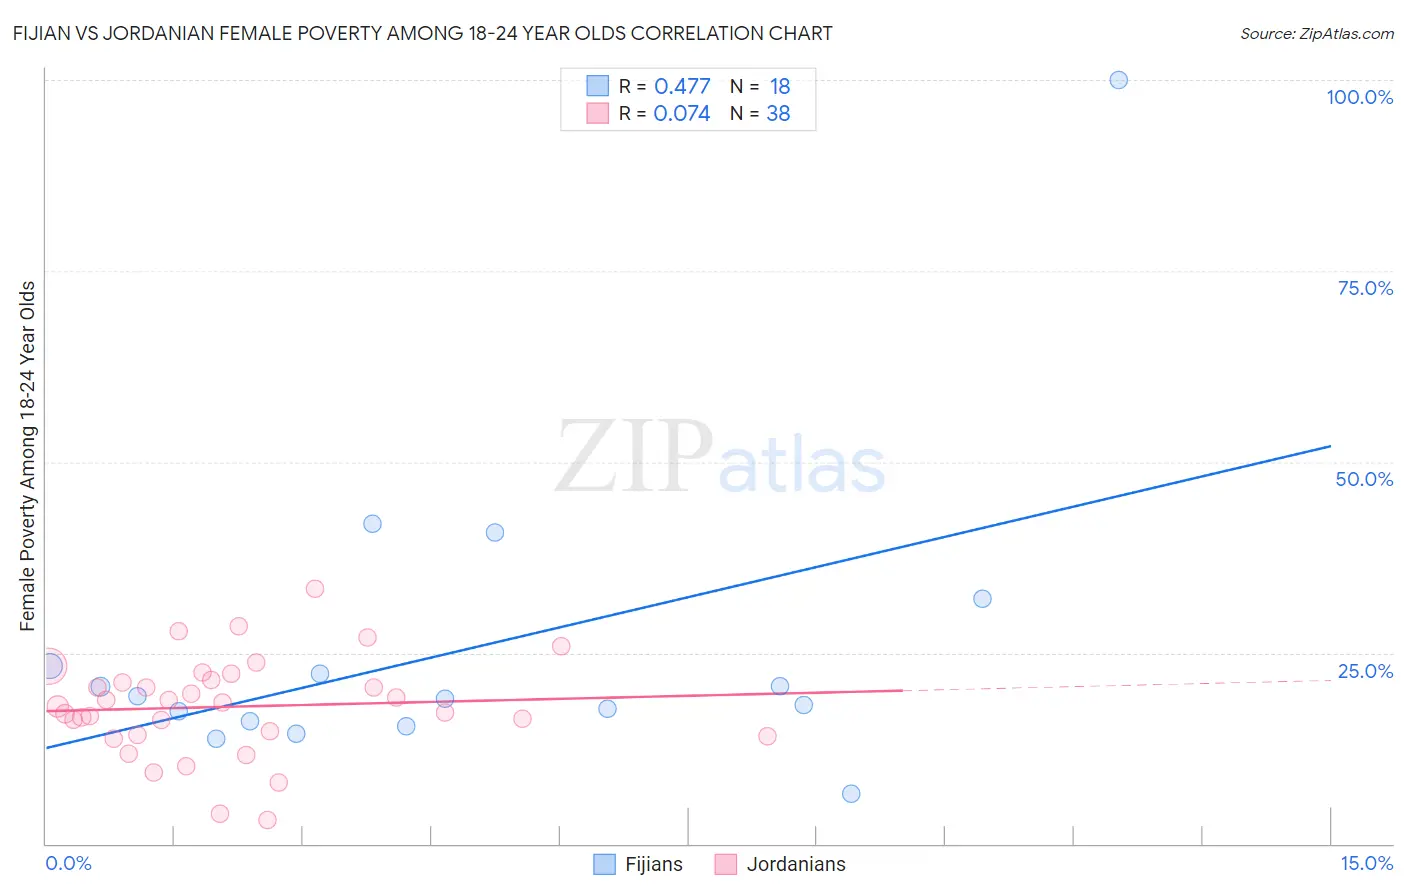 Fijian vs Jordanian Female Poverty Among 18-24 Year Olds